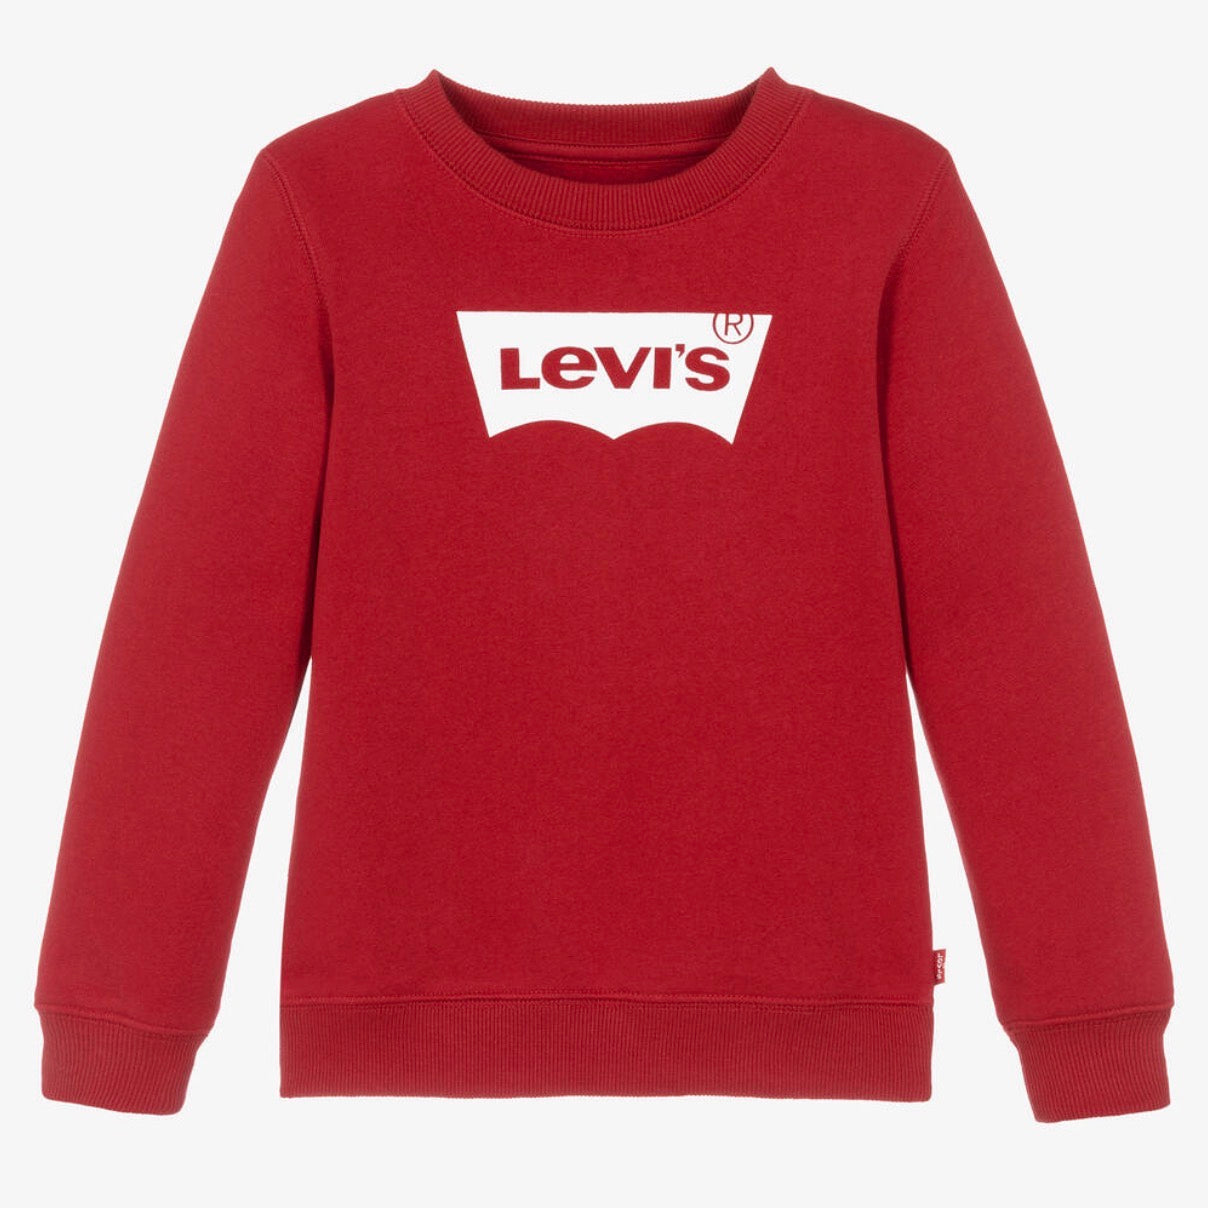 Levis Batwing Crew Sweatshirt 9E9079-R1r Red Clothing 10YRS / Red,12YRS / Red,14YRS / Red,16YRS / Red